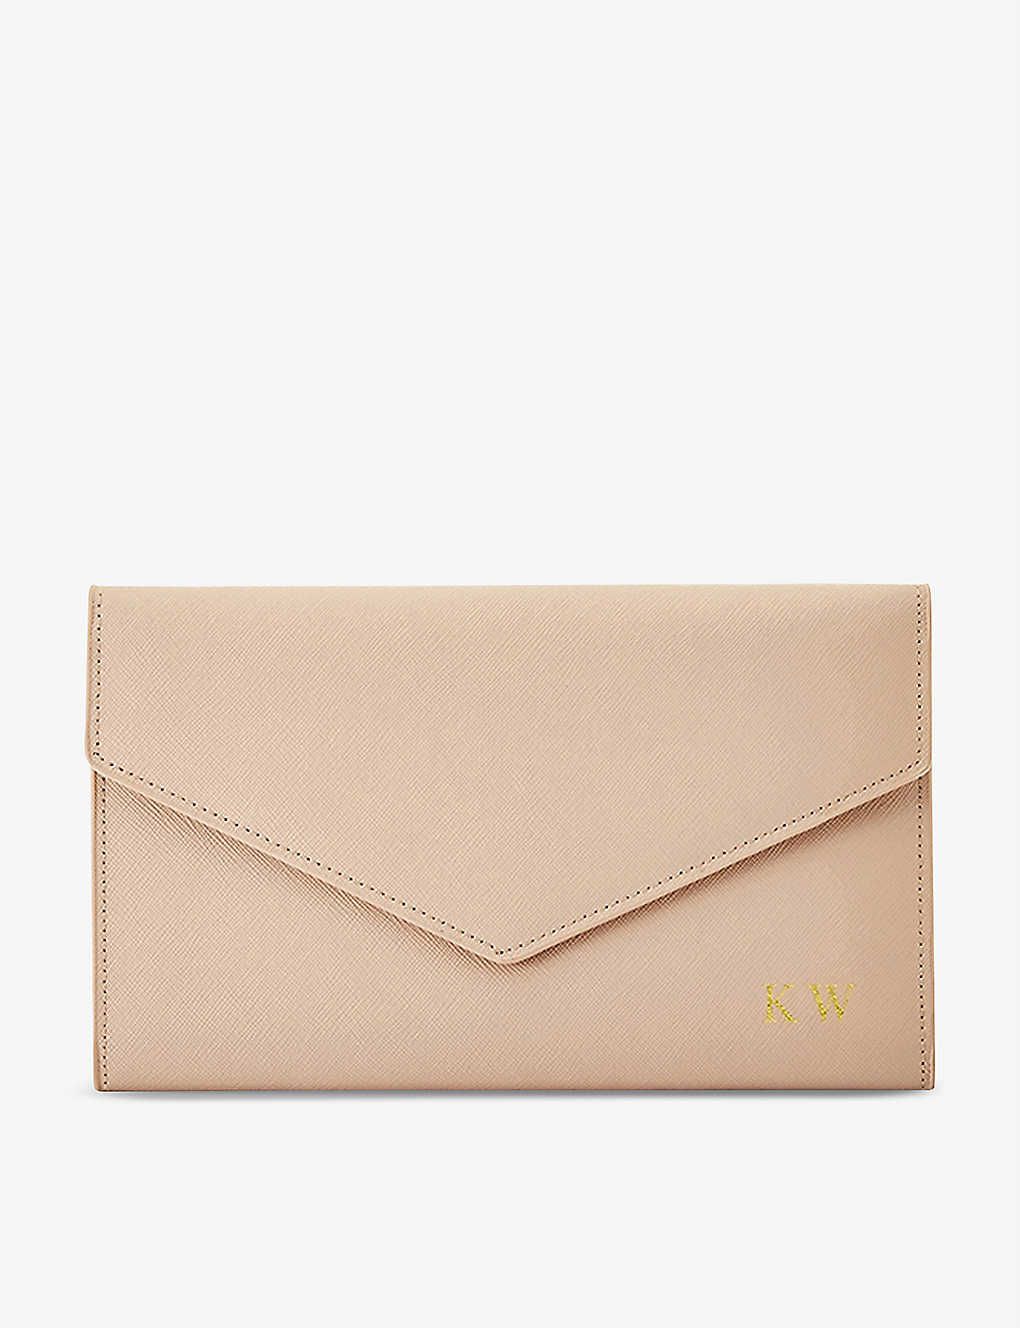 H A DESIGNS Personalised leather travel envelope | Selfridges